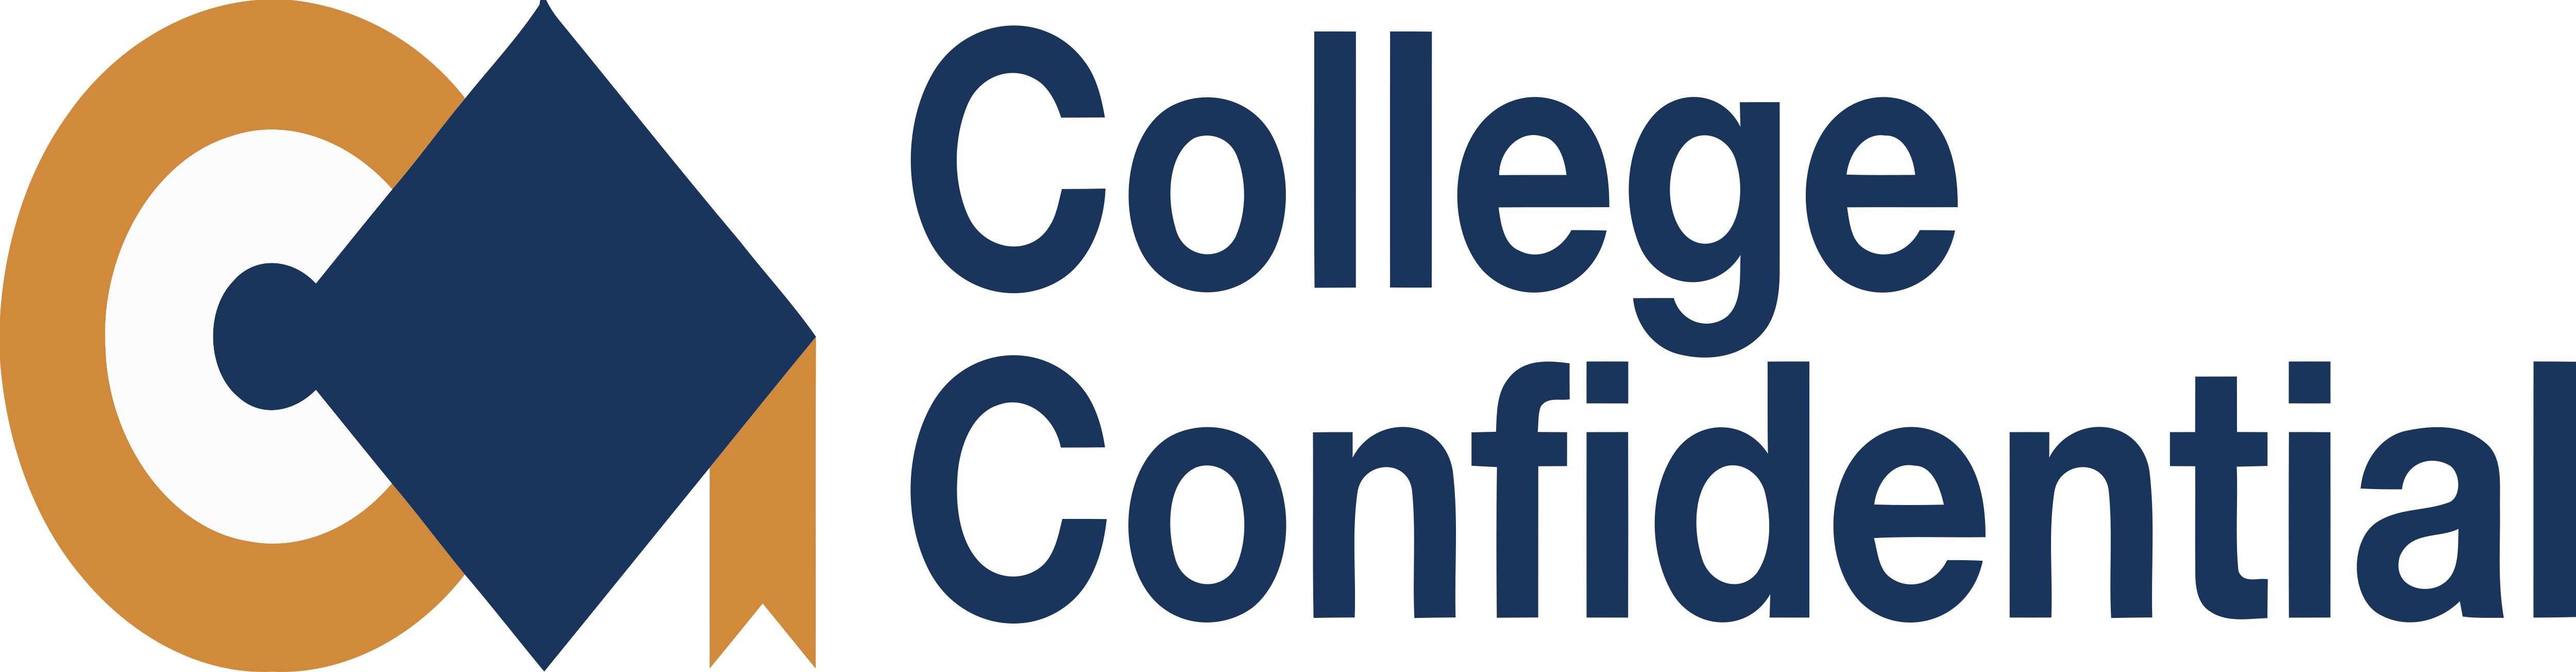 College Confidential Logos Download